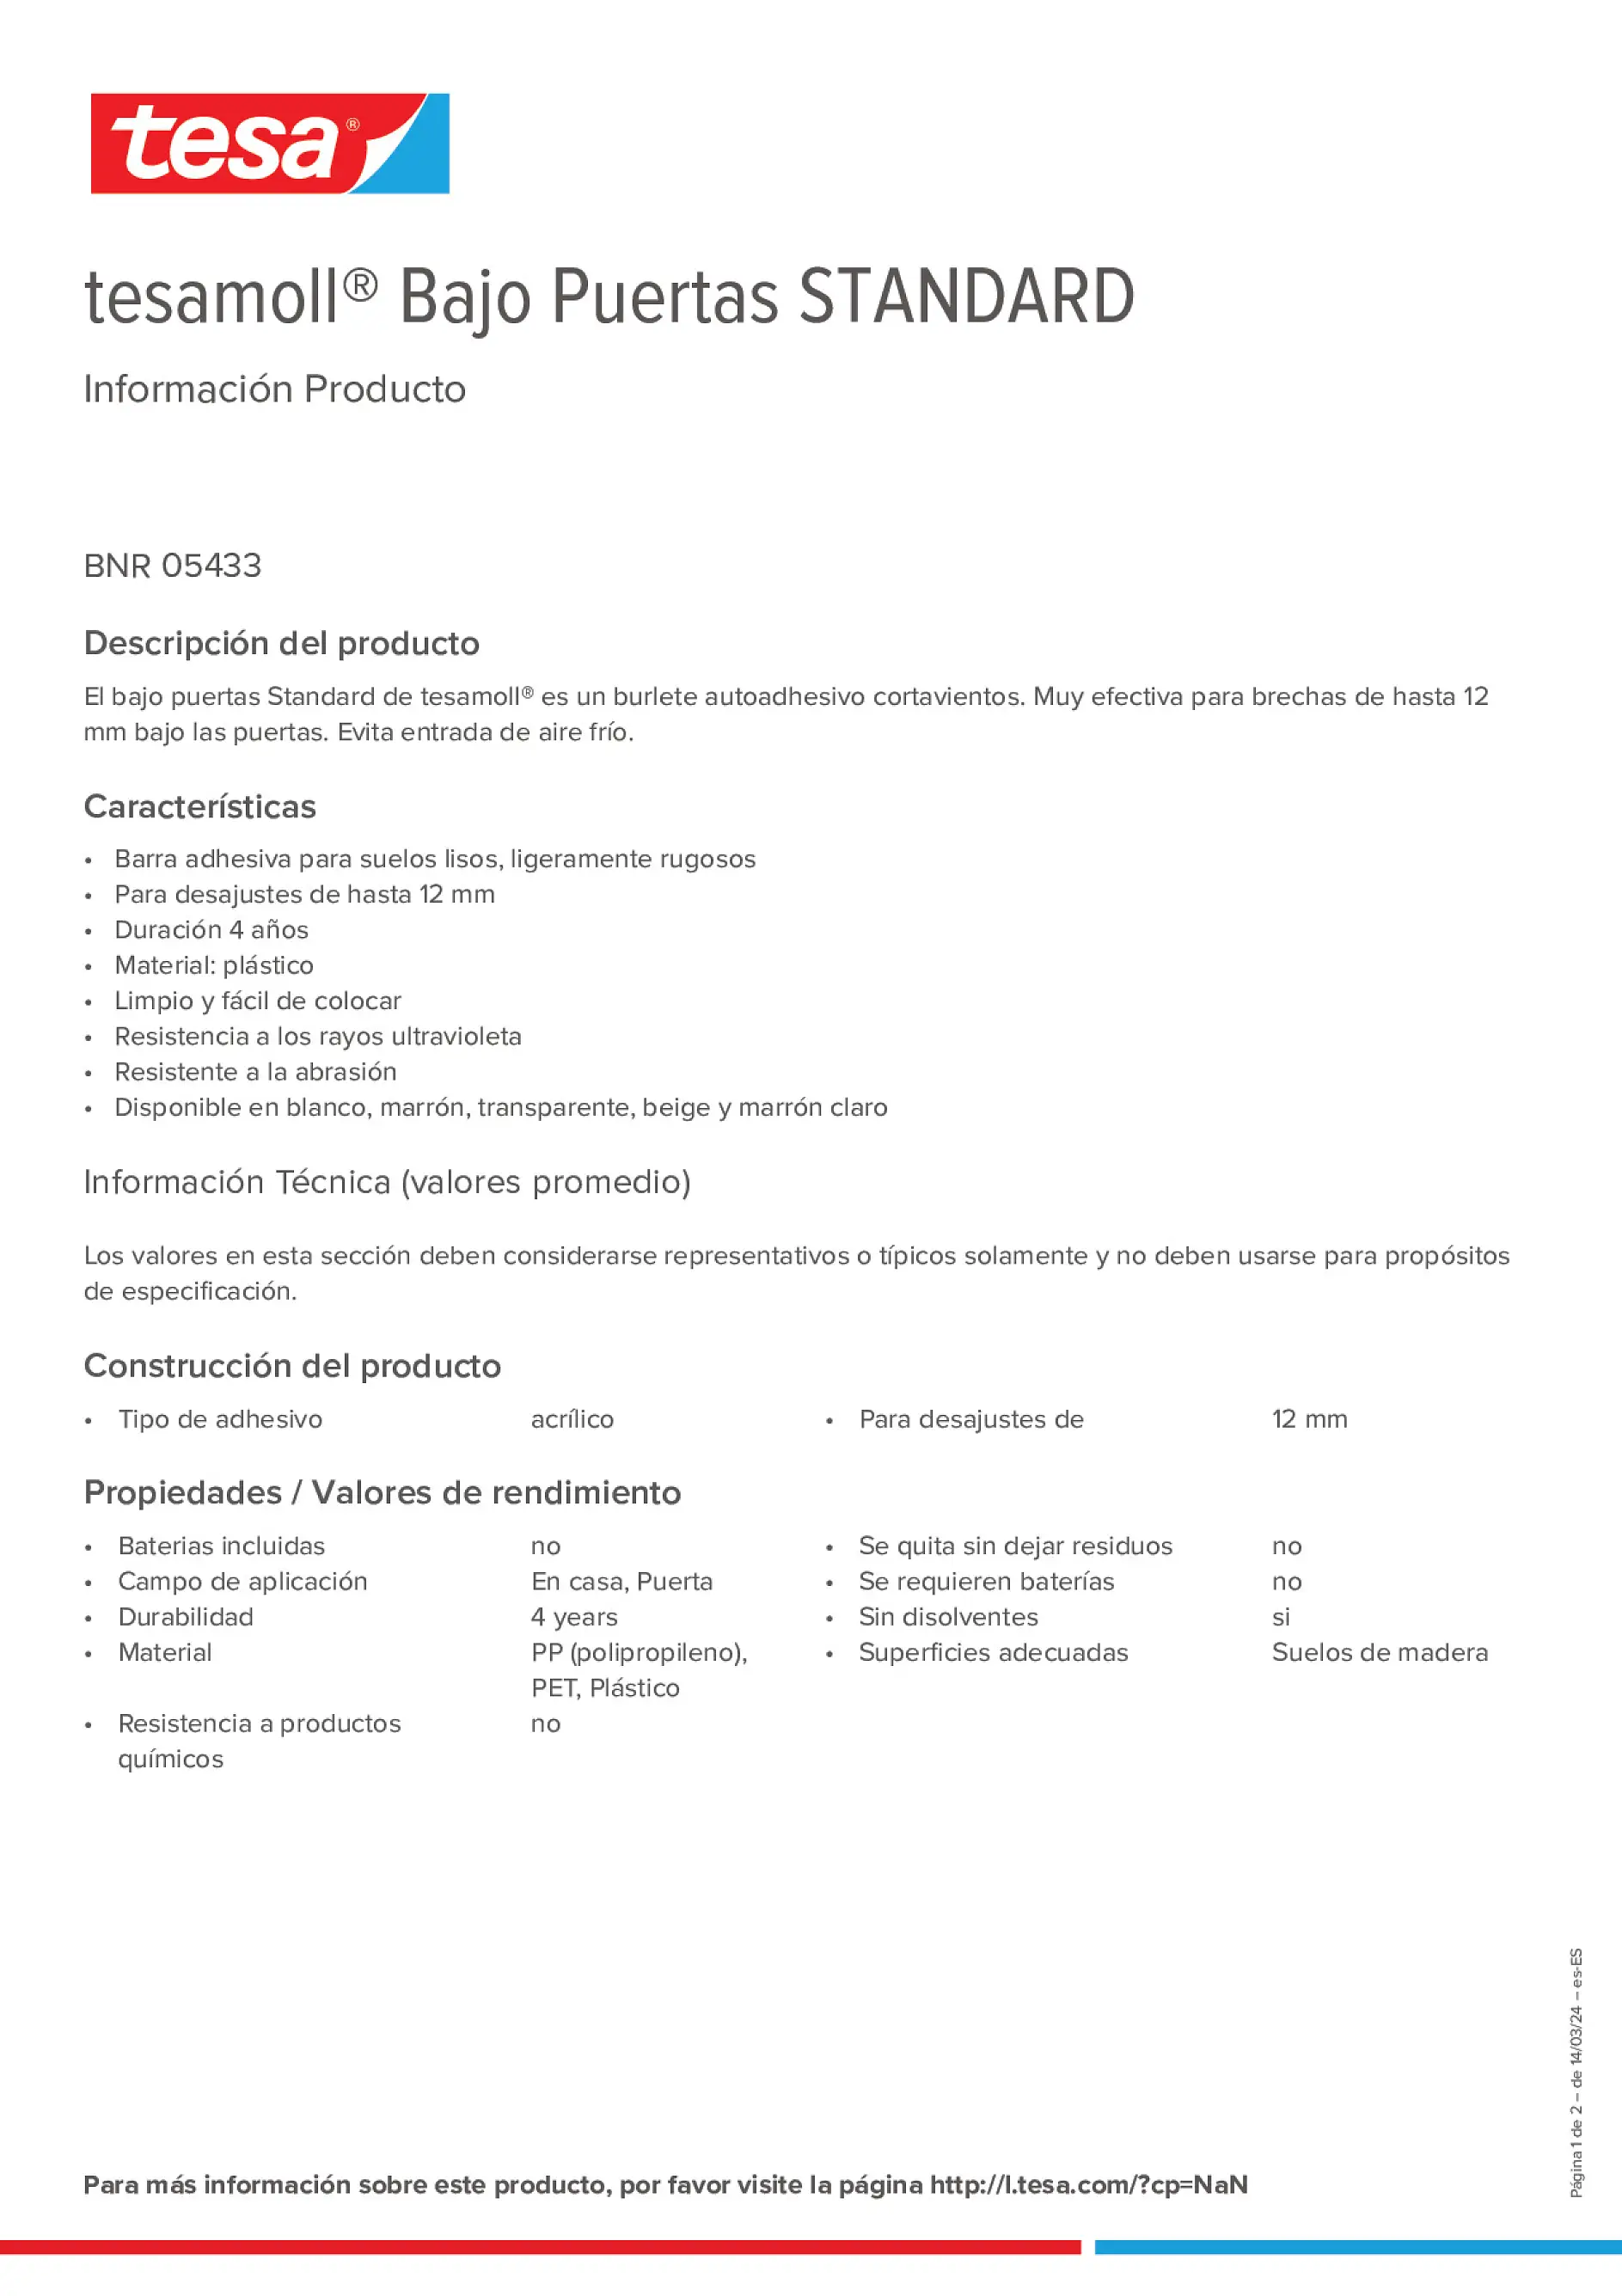 Product information_tesamoll® 05433_es-ES